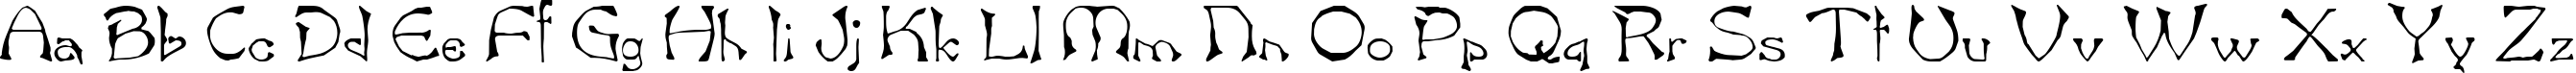 Пример написания английского алфавита шрифтом Bard.kz